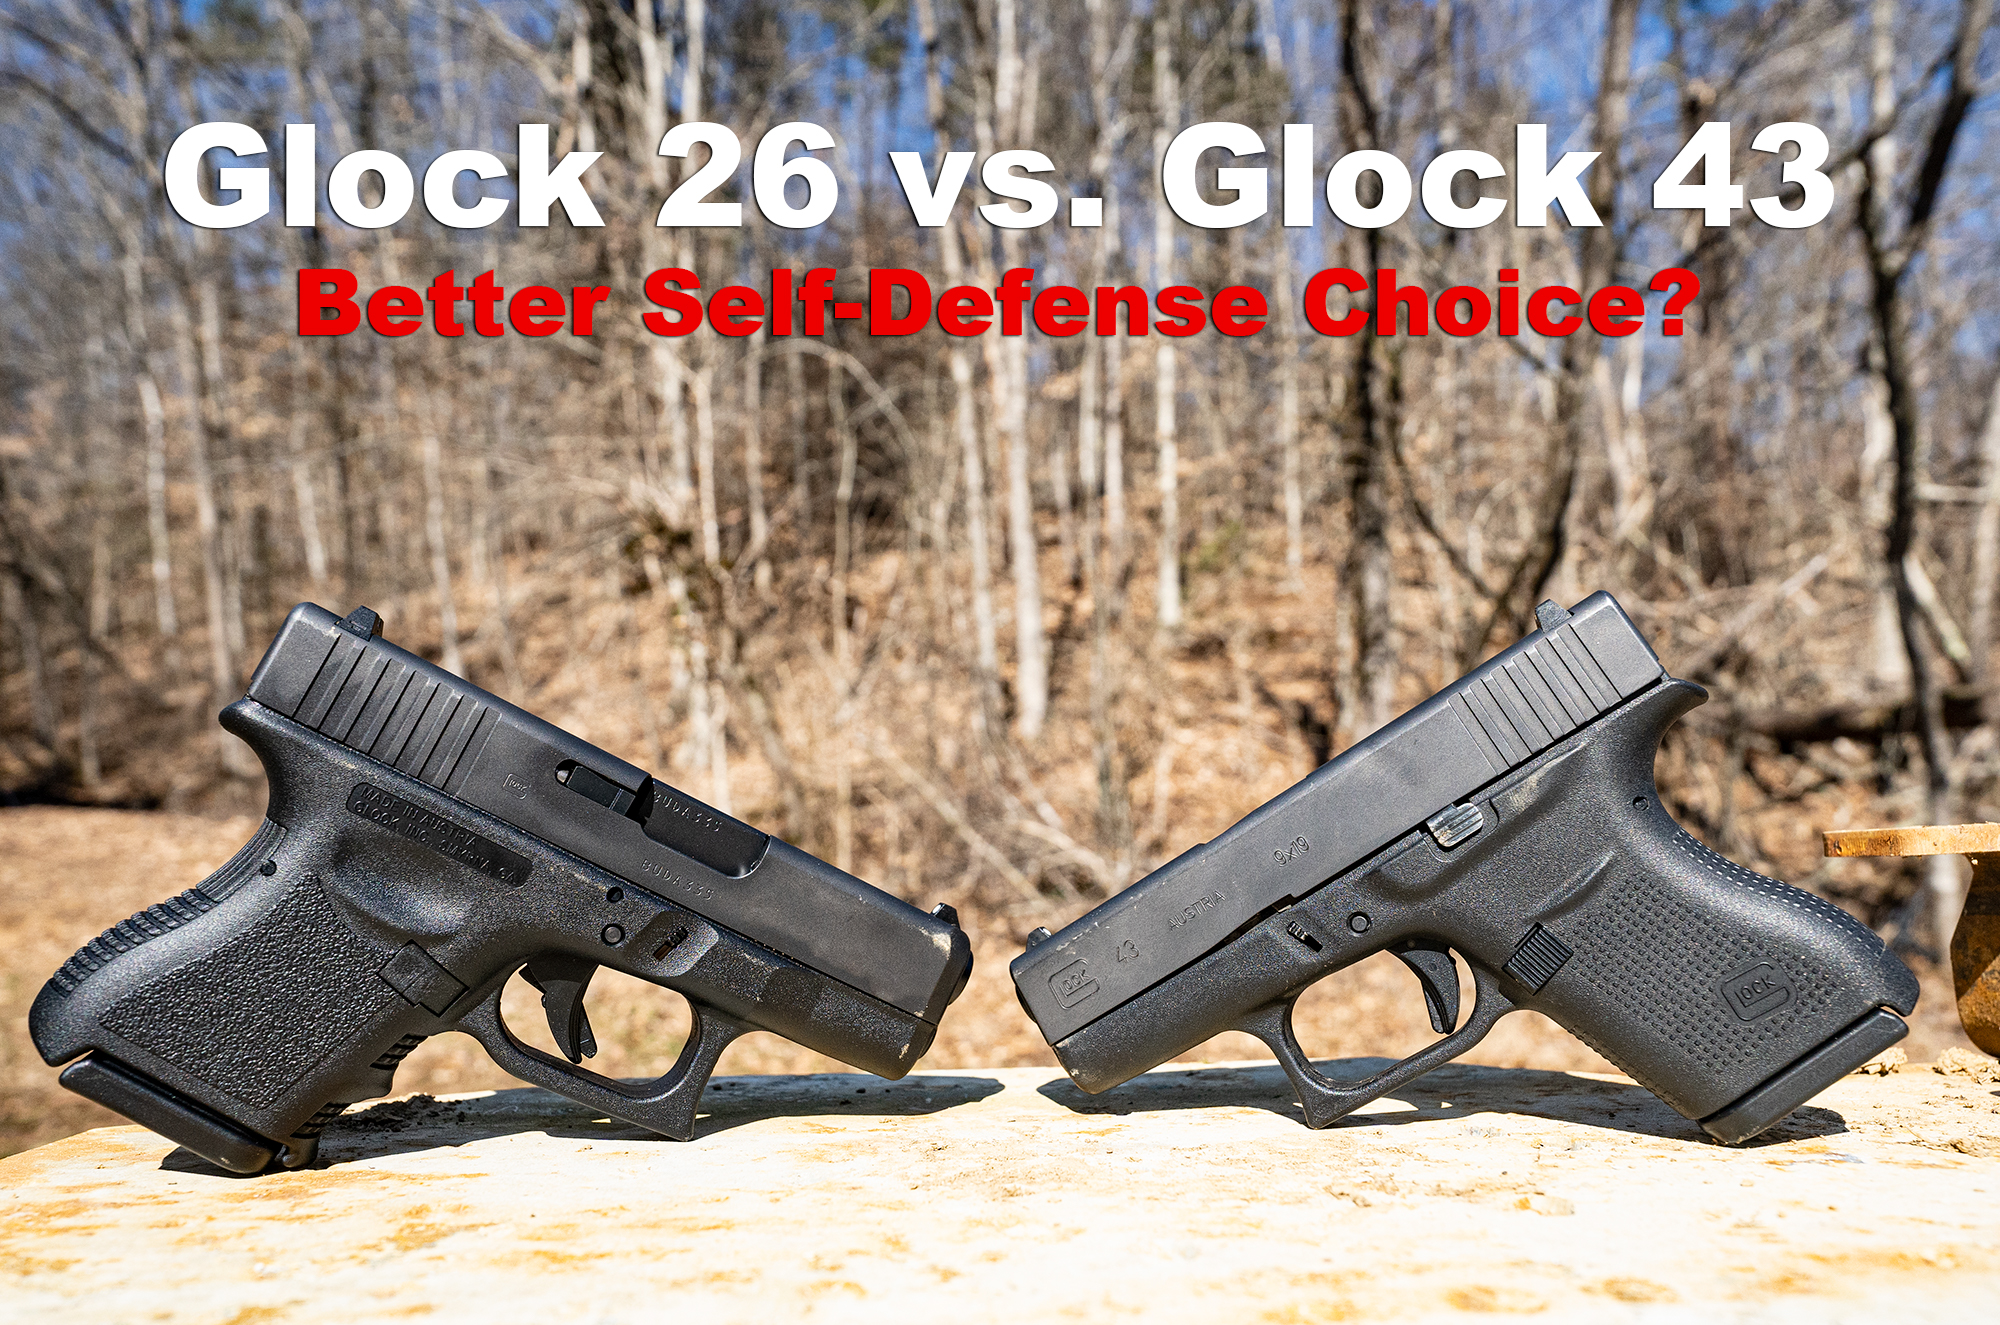 Glock 26 vs Glock 43 pistols at a shooting range